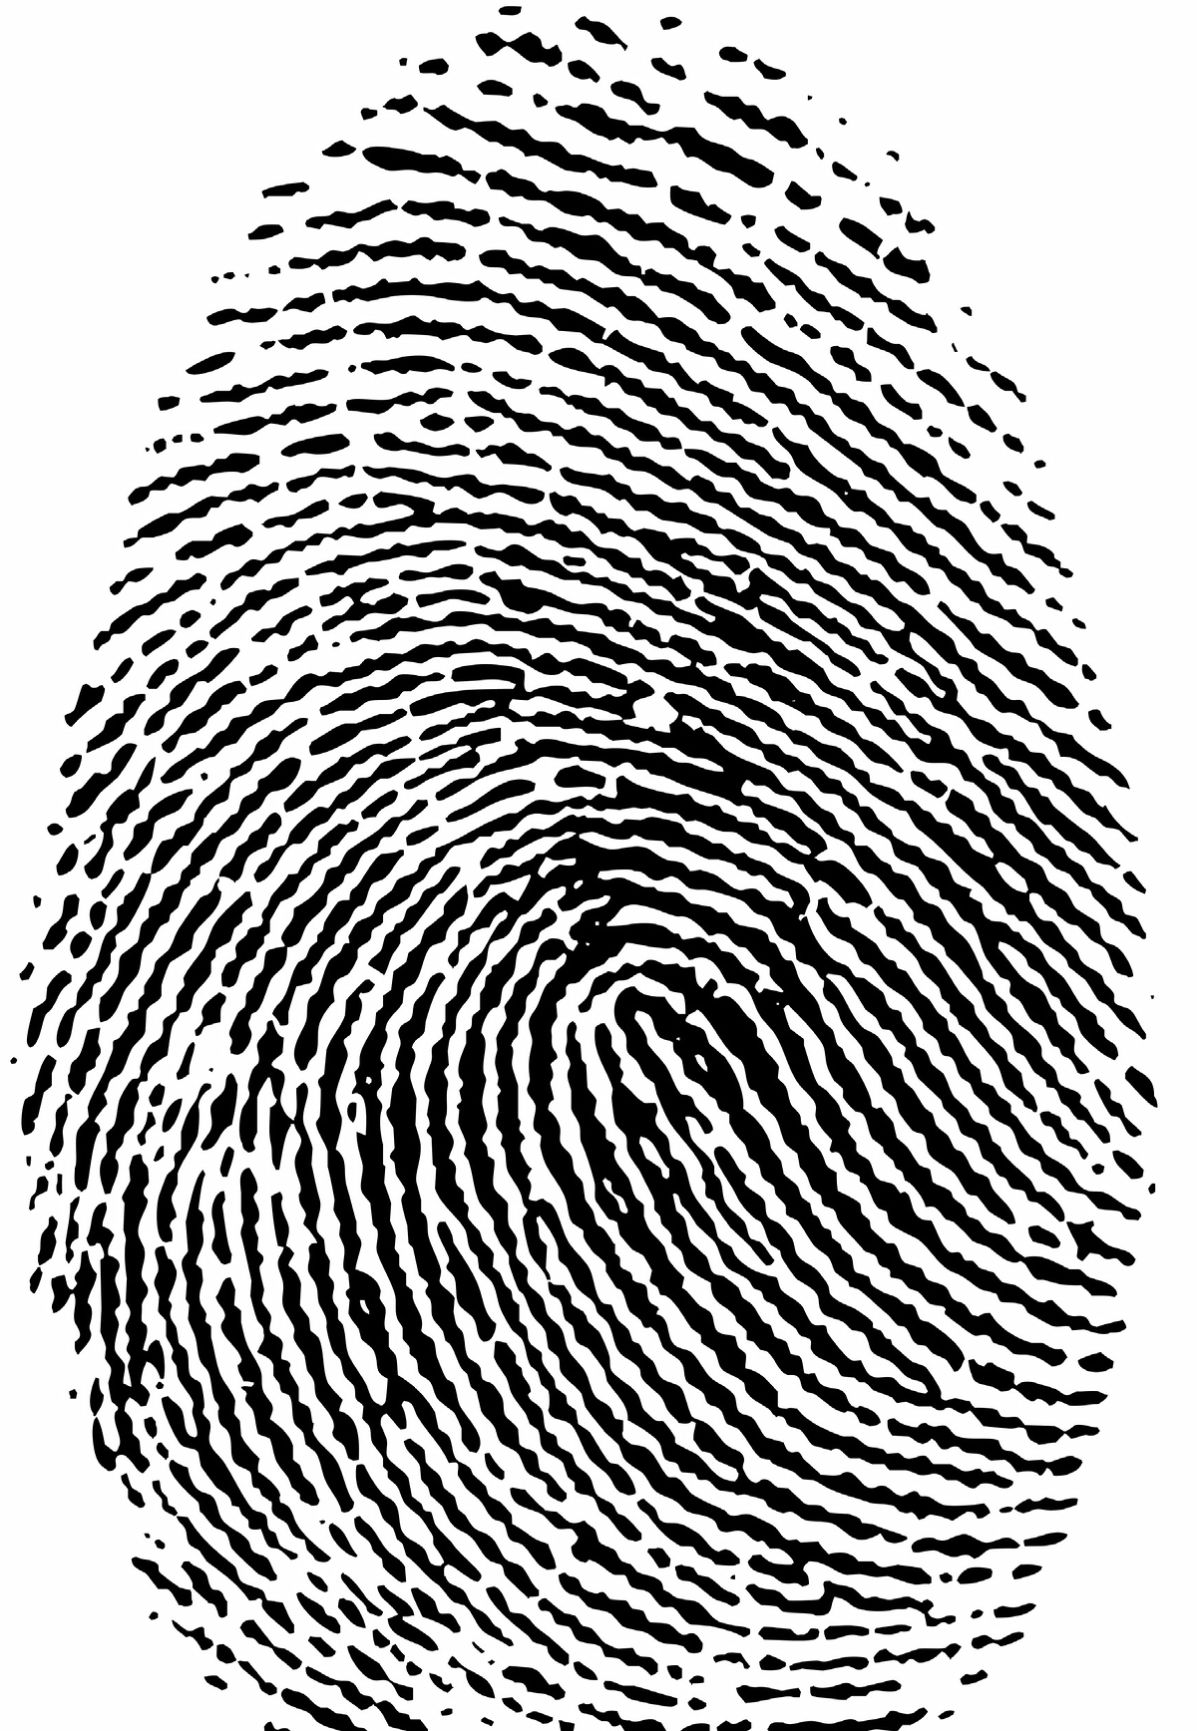 Day care providers blast fingerprint requirement | Politics ...